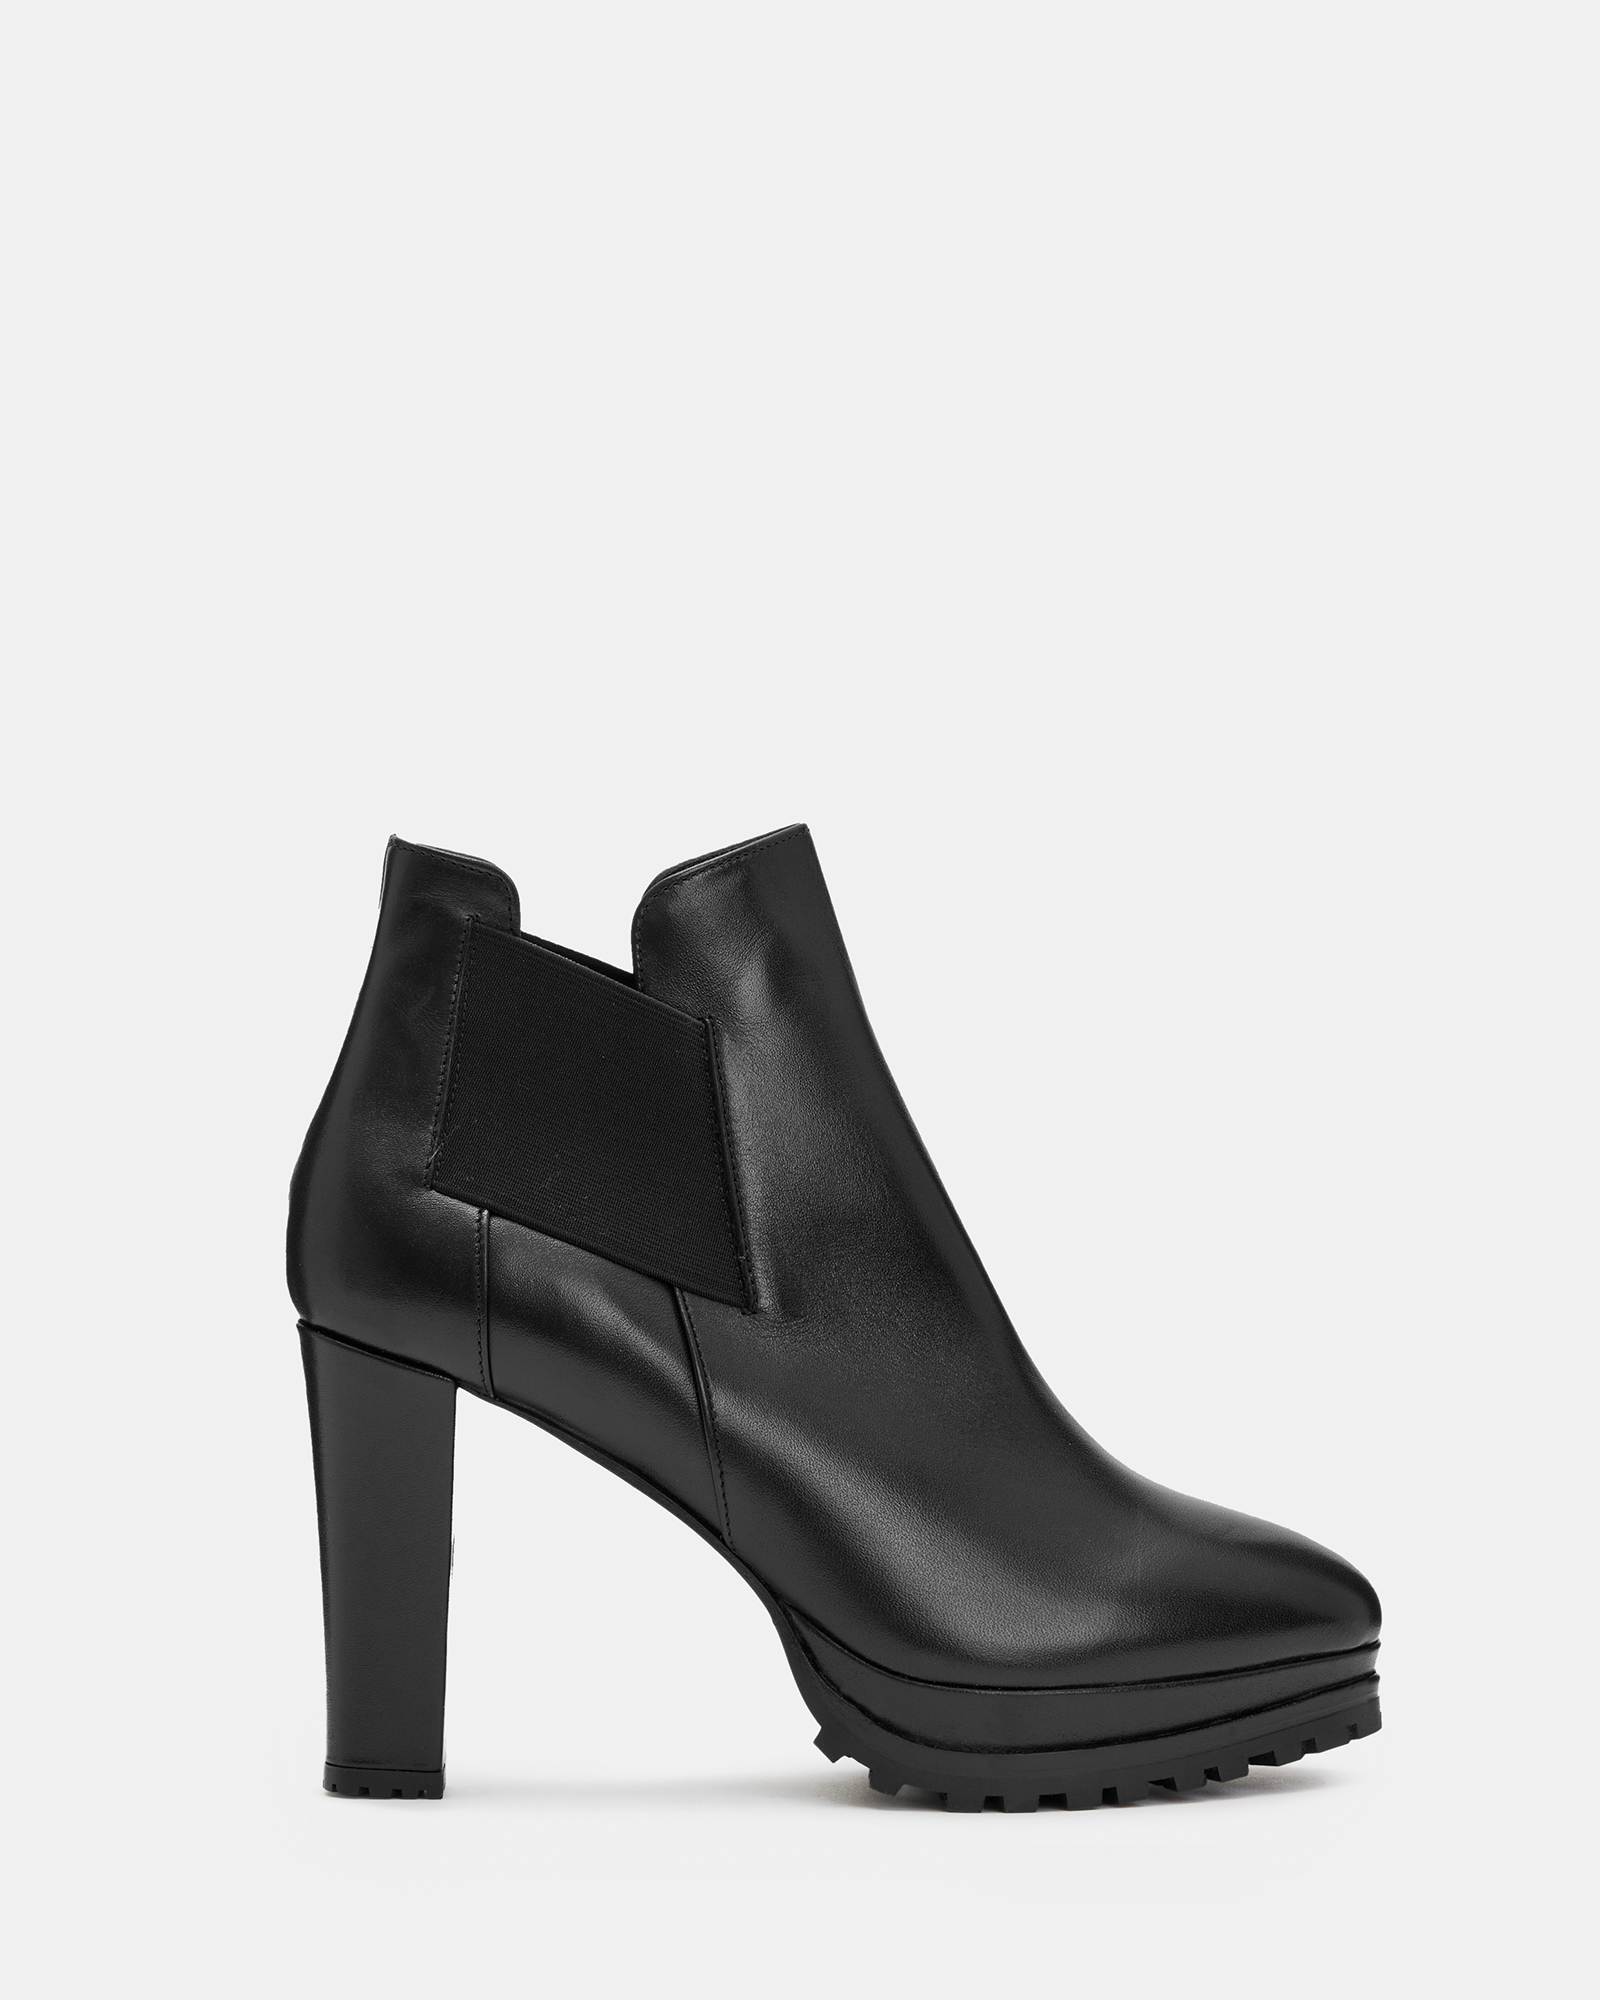 AllSaints Sarris Heeled Leather Boots,, Black